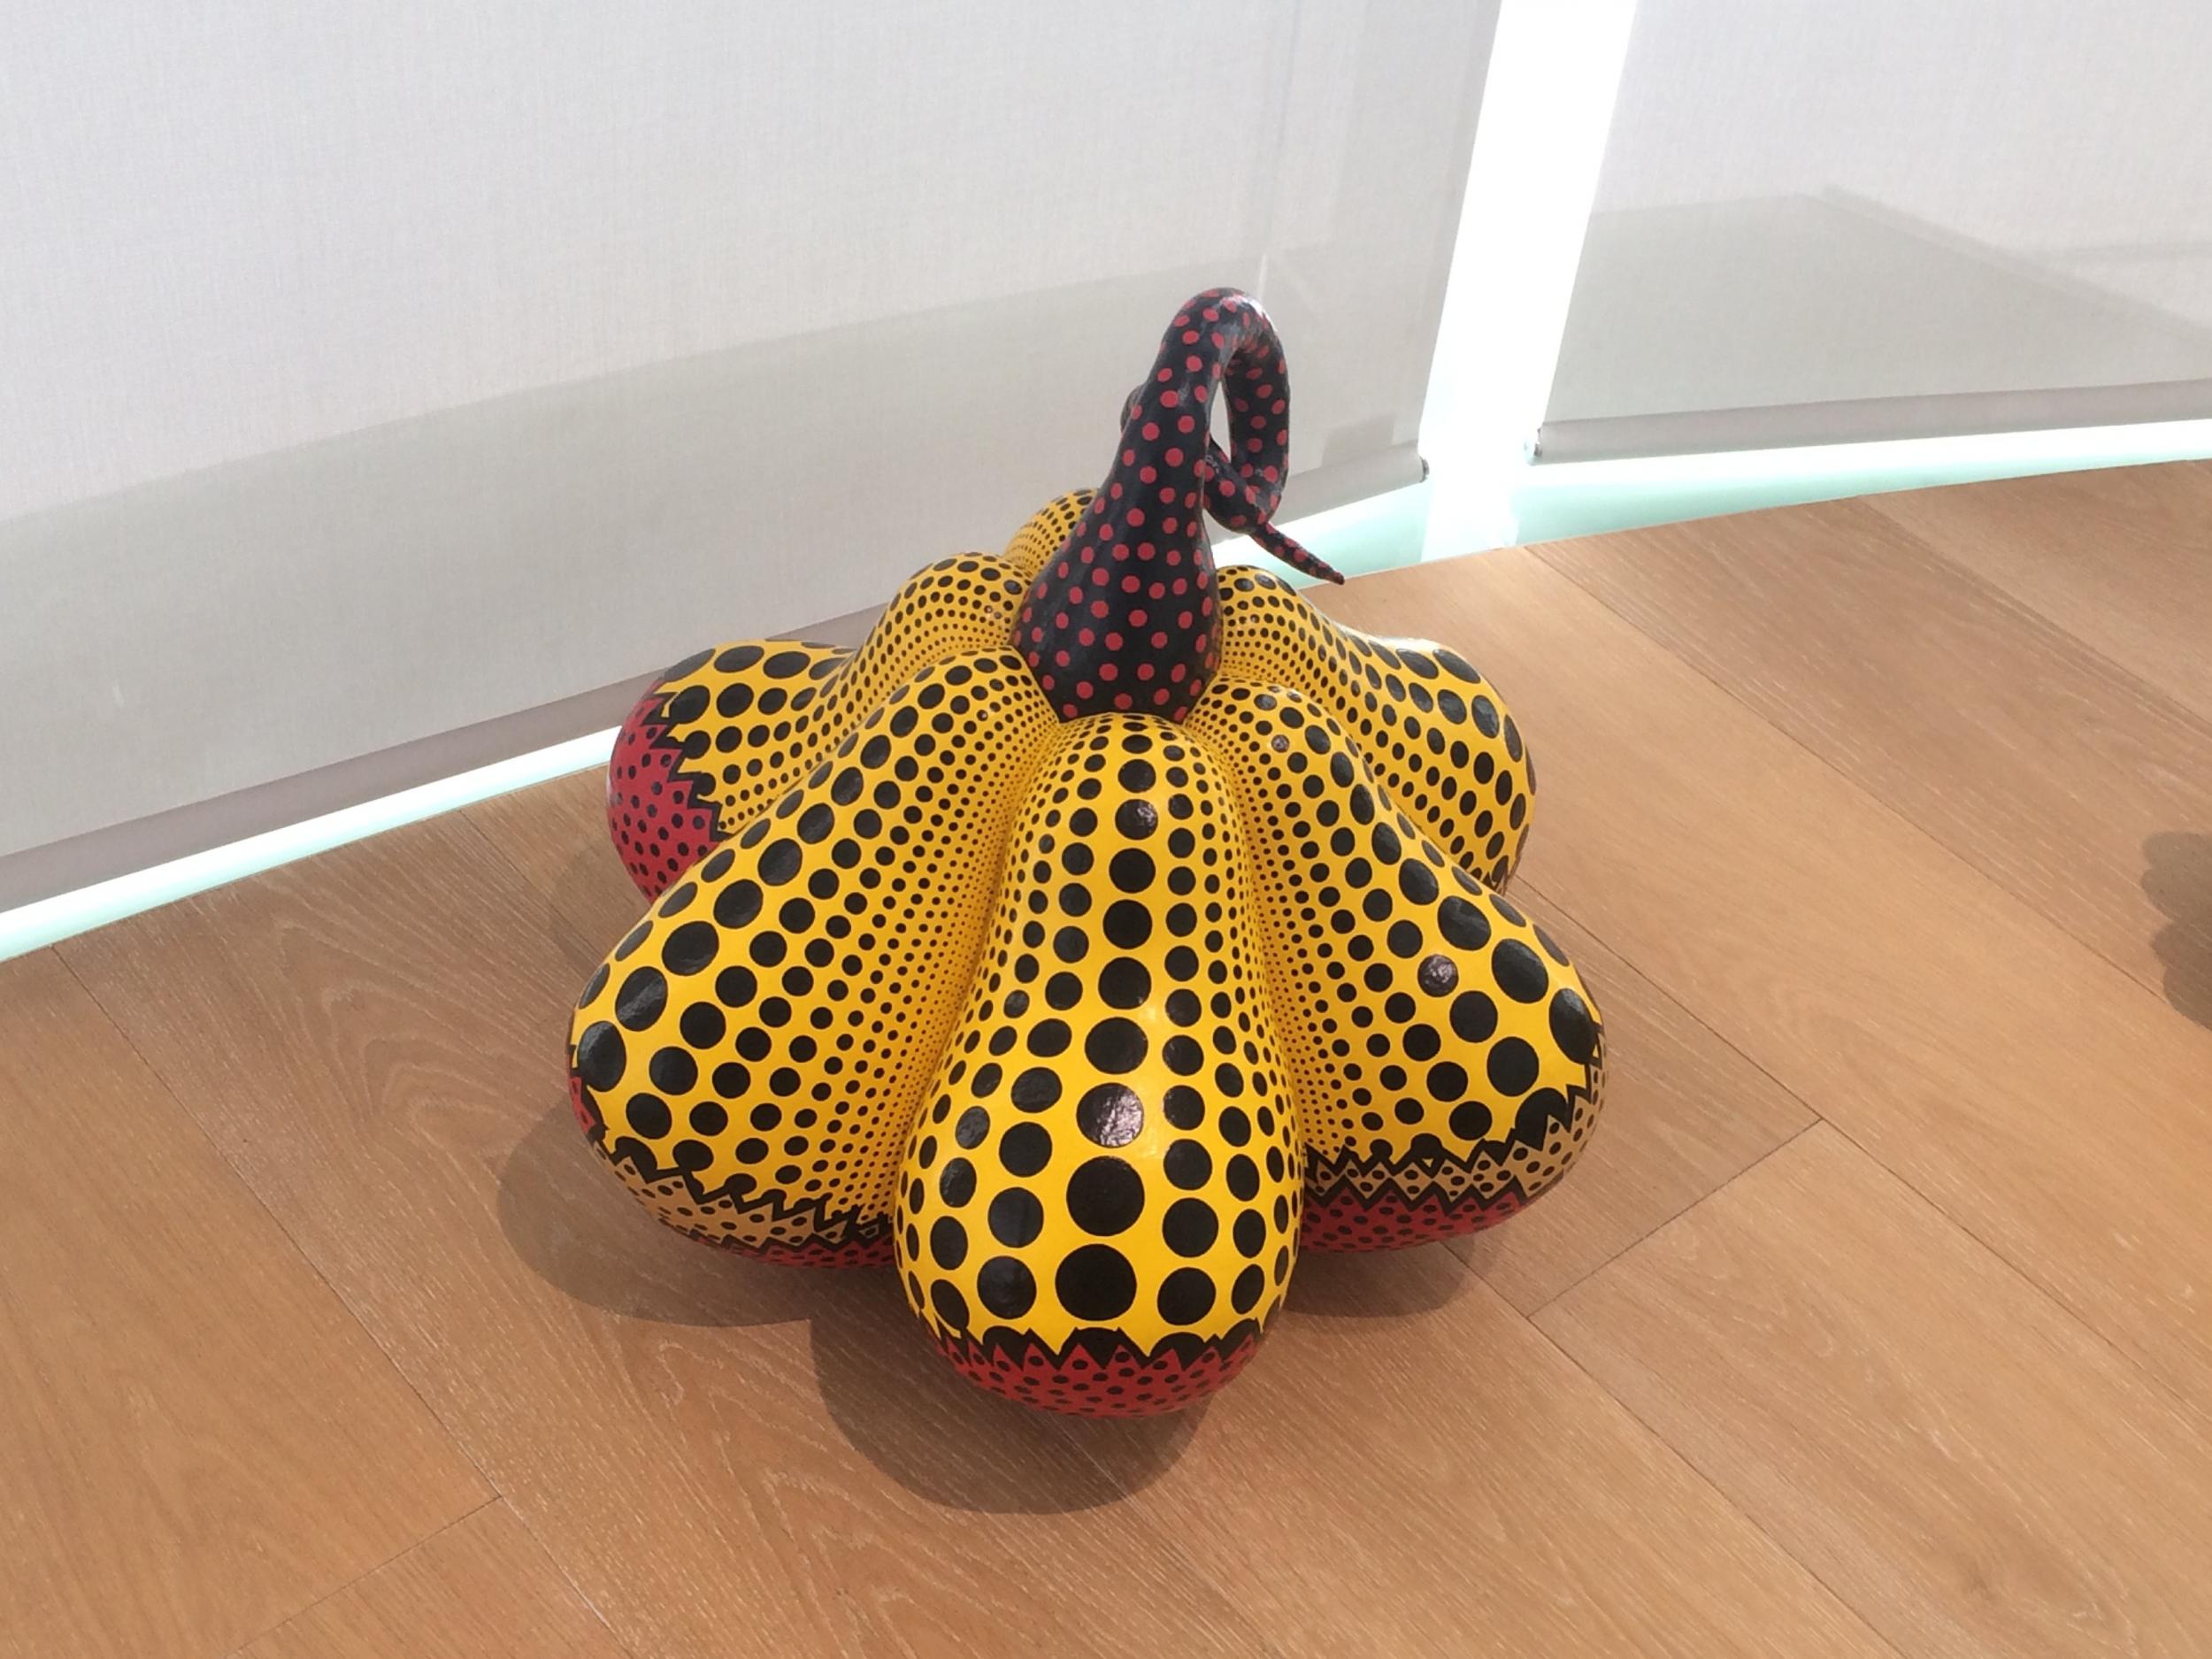 Yayoi Kusama's signature pumpkins